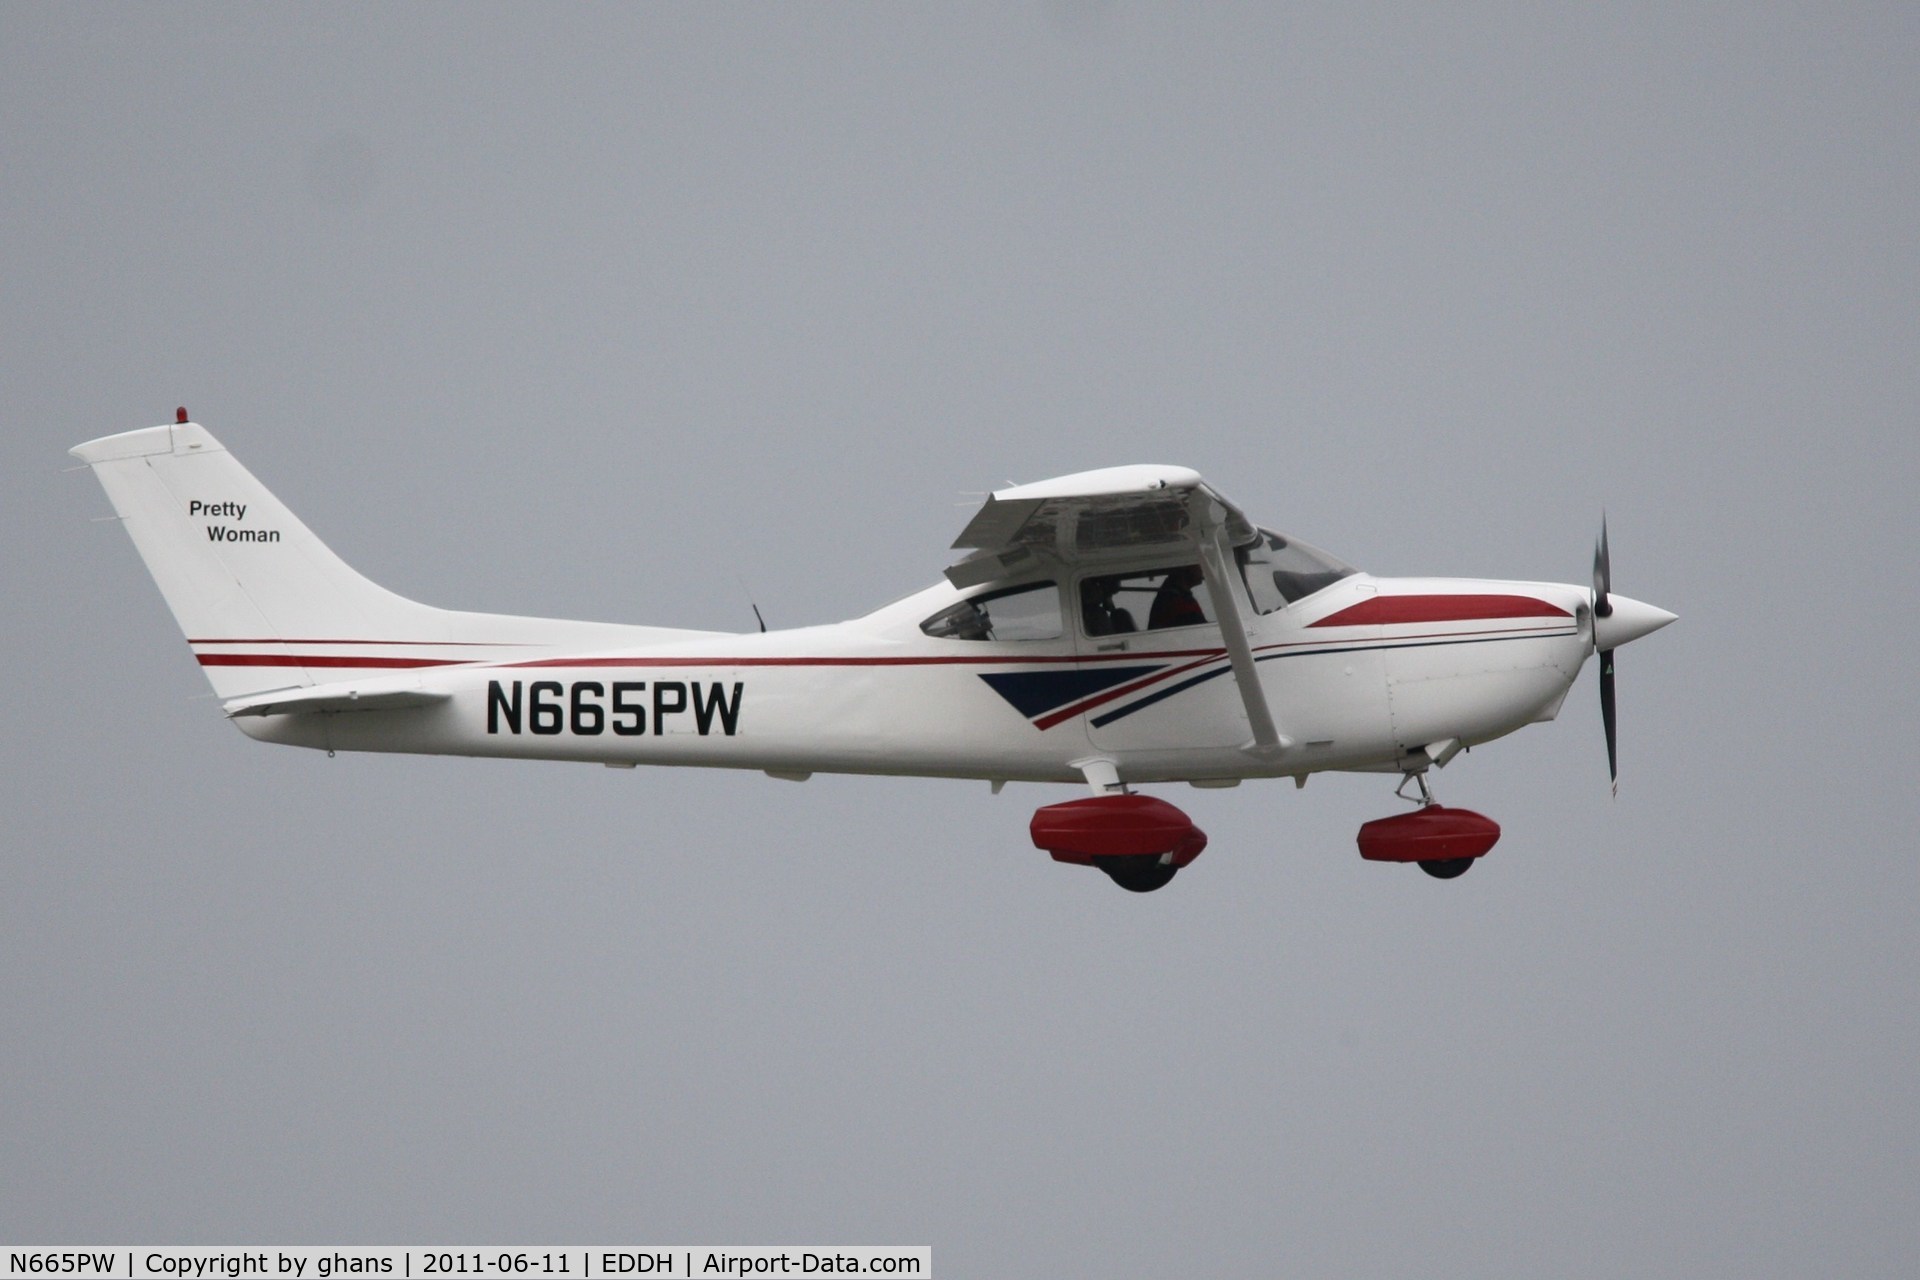 N665PW, 1999 Cessna 182S Skylane C/N 18280494, Pretty Woman